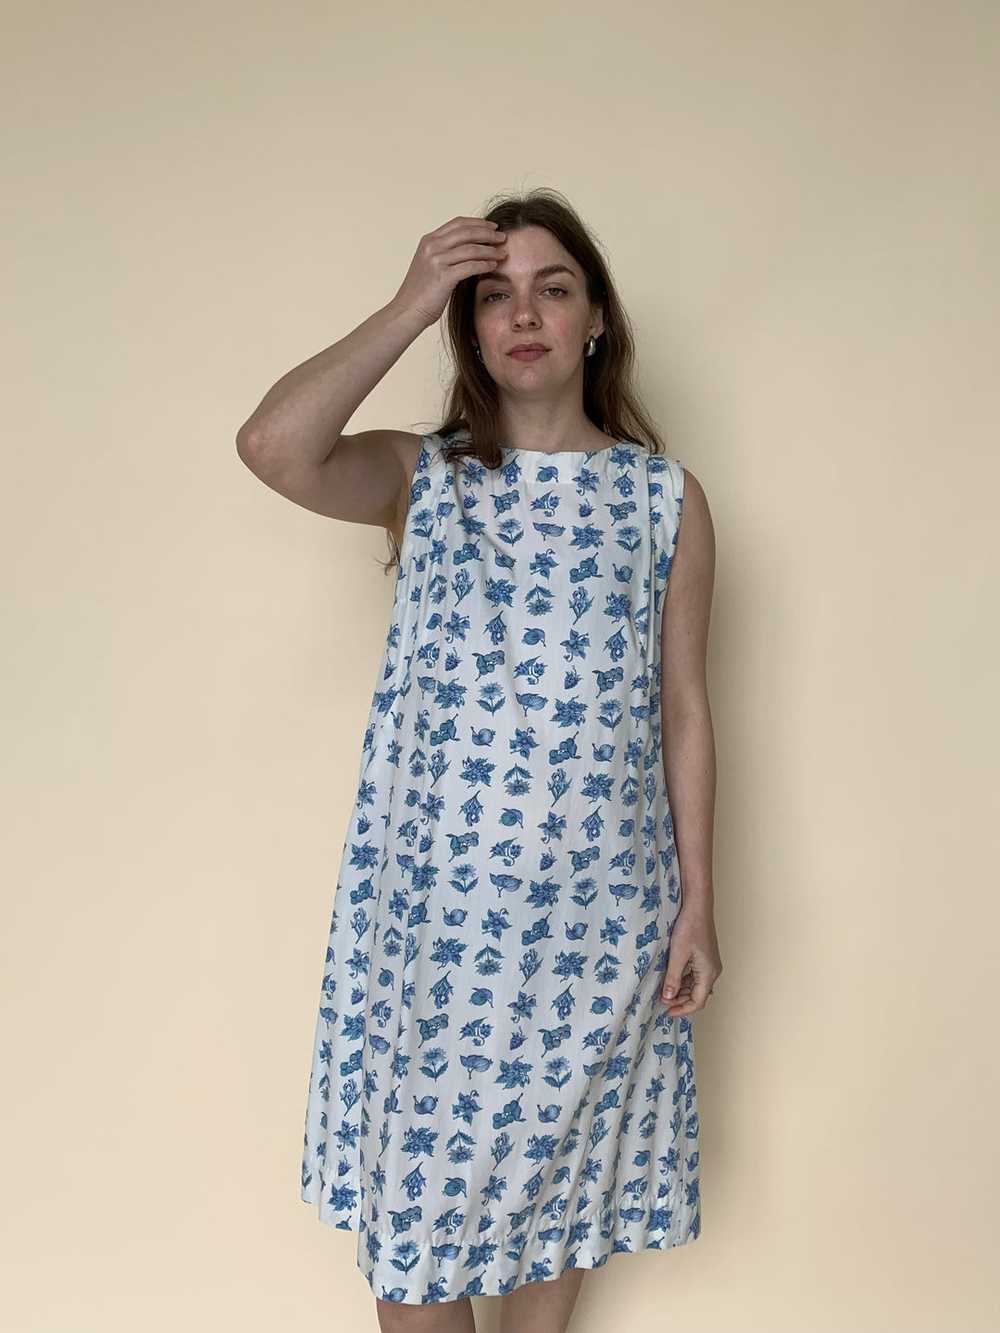 Blueberry print vintage dress - image 2